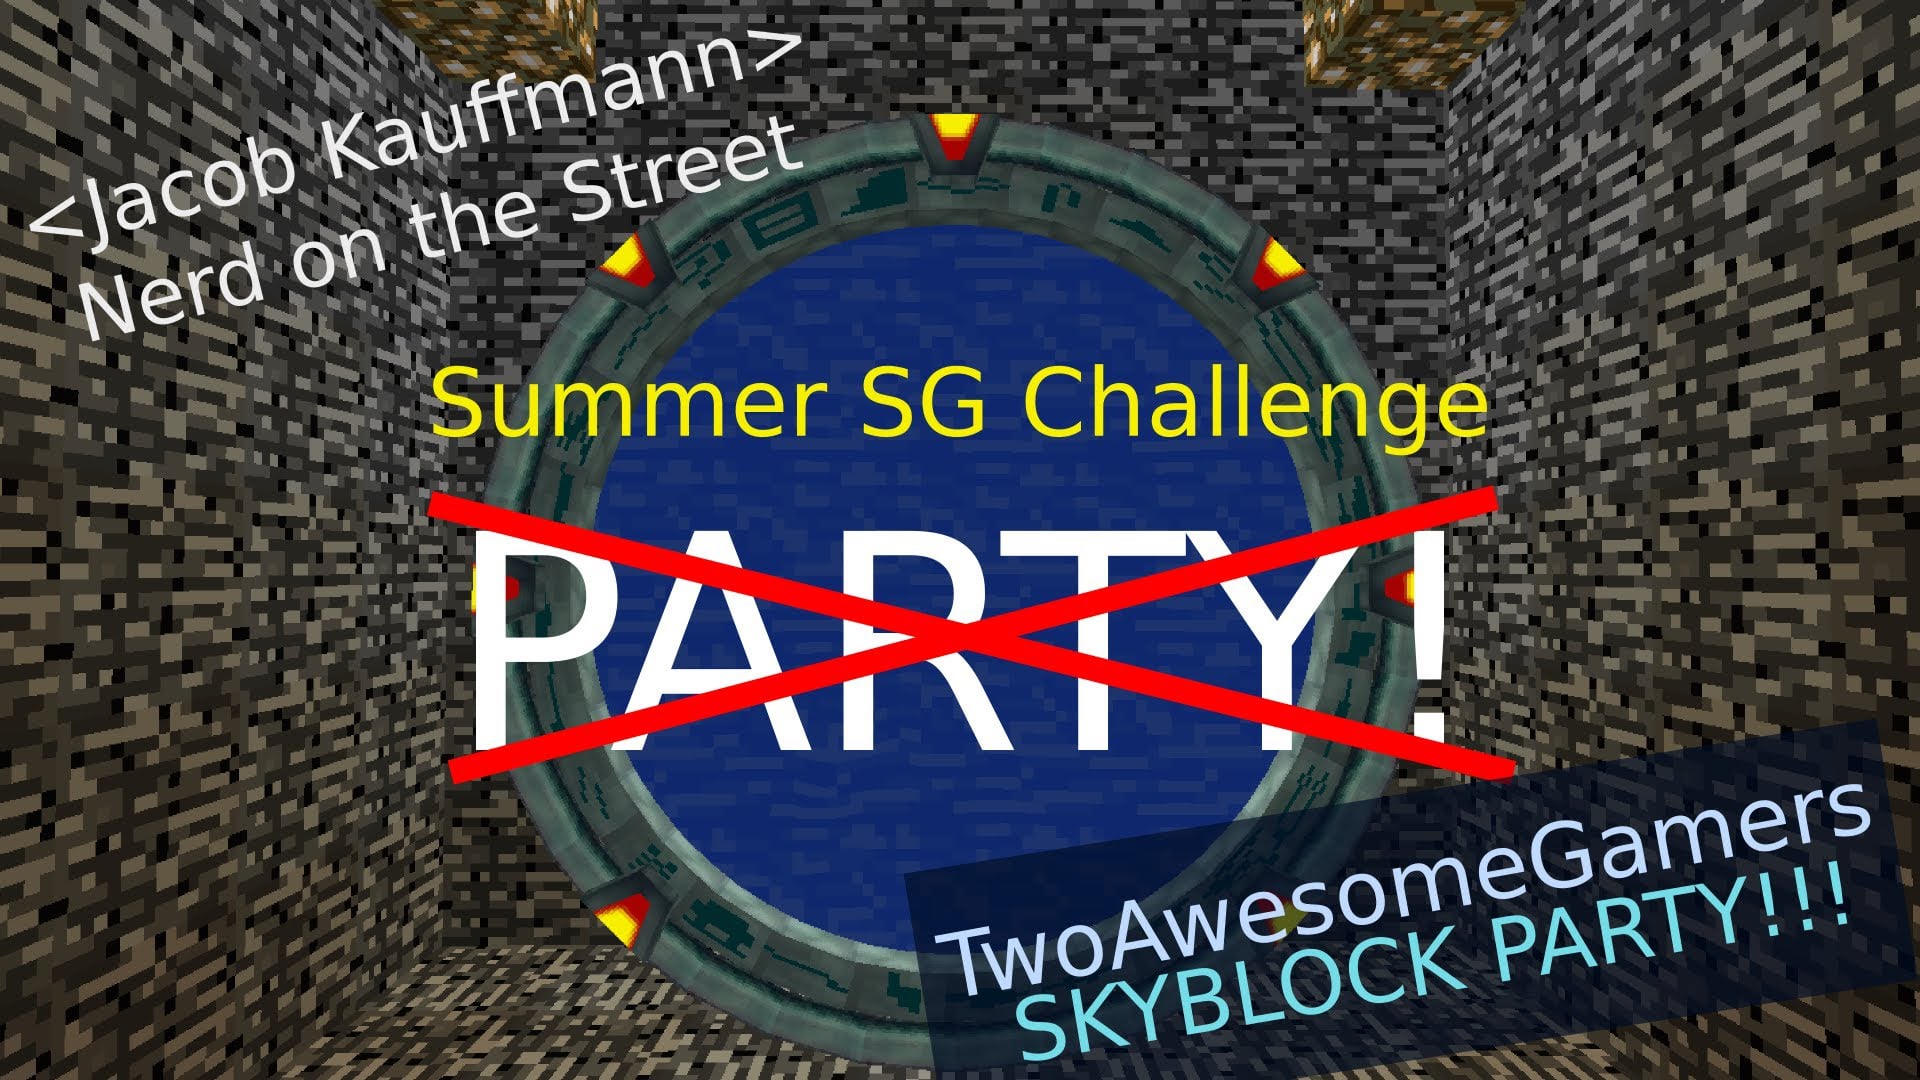 P̶a̶i̶n̶t̶b̶a̶l̶l̶ ̶P̶a̶r̶t̶y̶ SKYBLOCK PARTY!!! (TwoAwesomeGamers!)